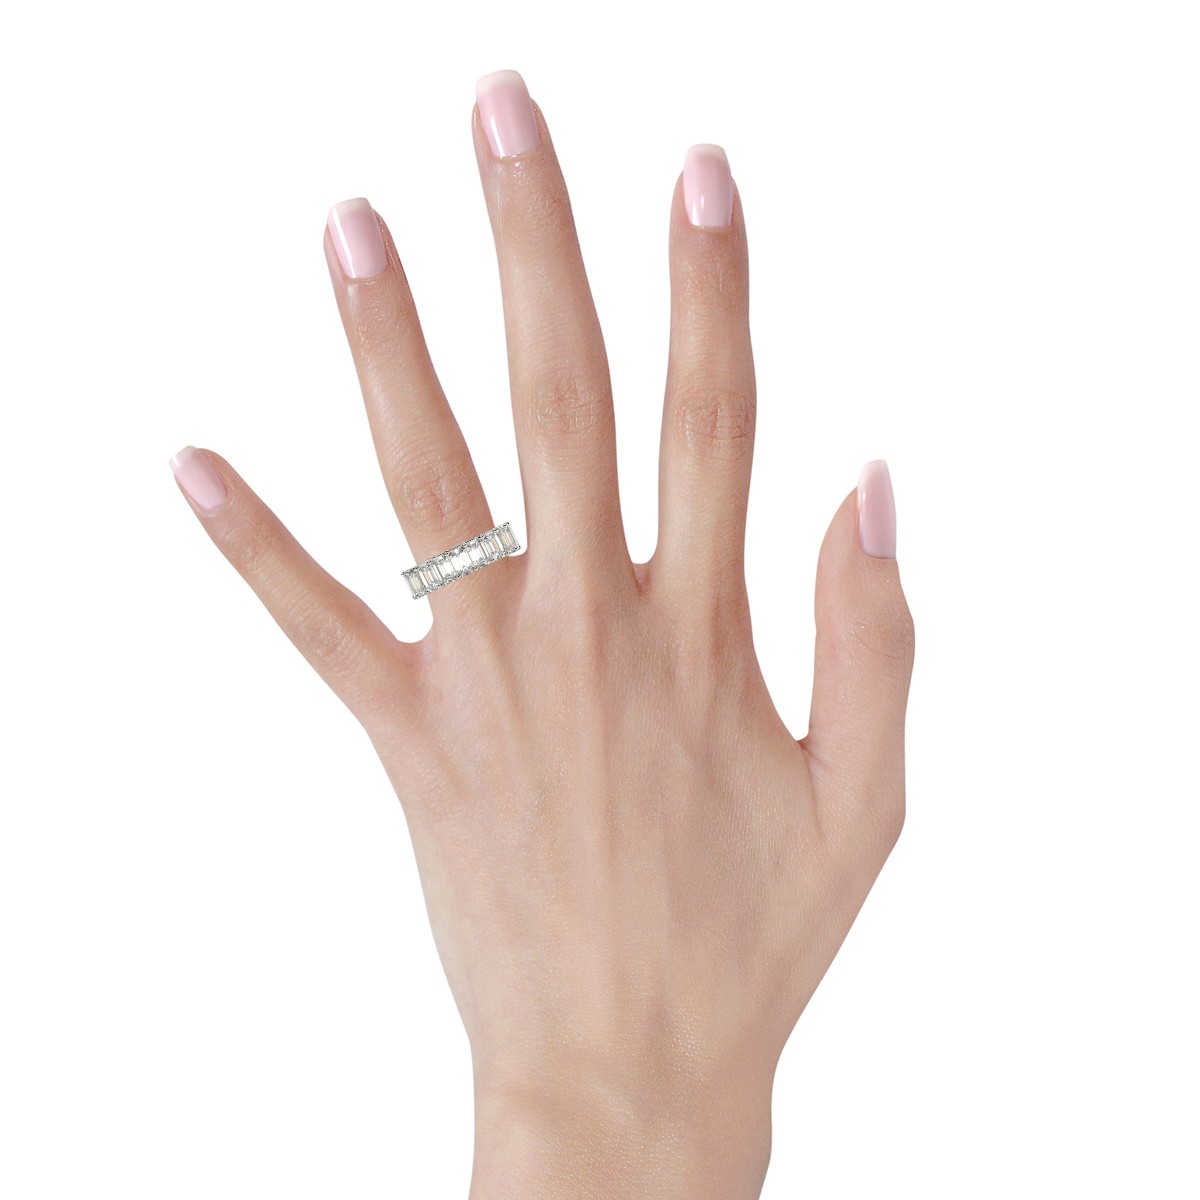 Classic Eternity Ring with Emerald Cut Diamonds in Platinum